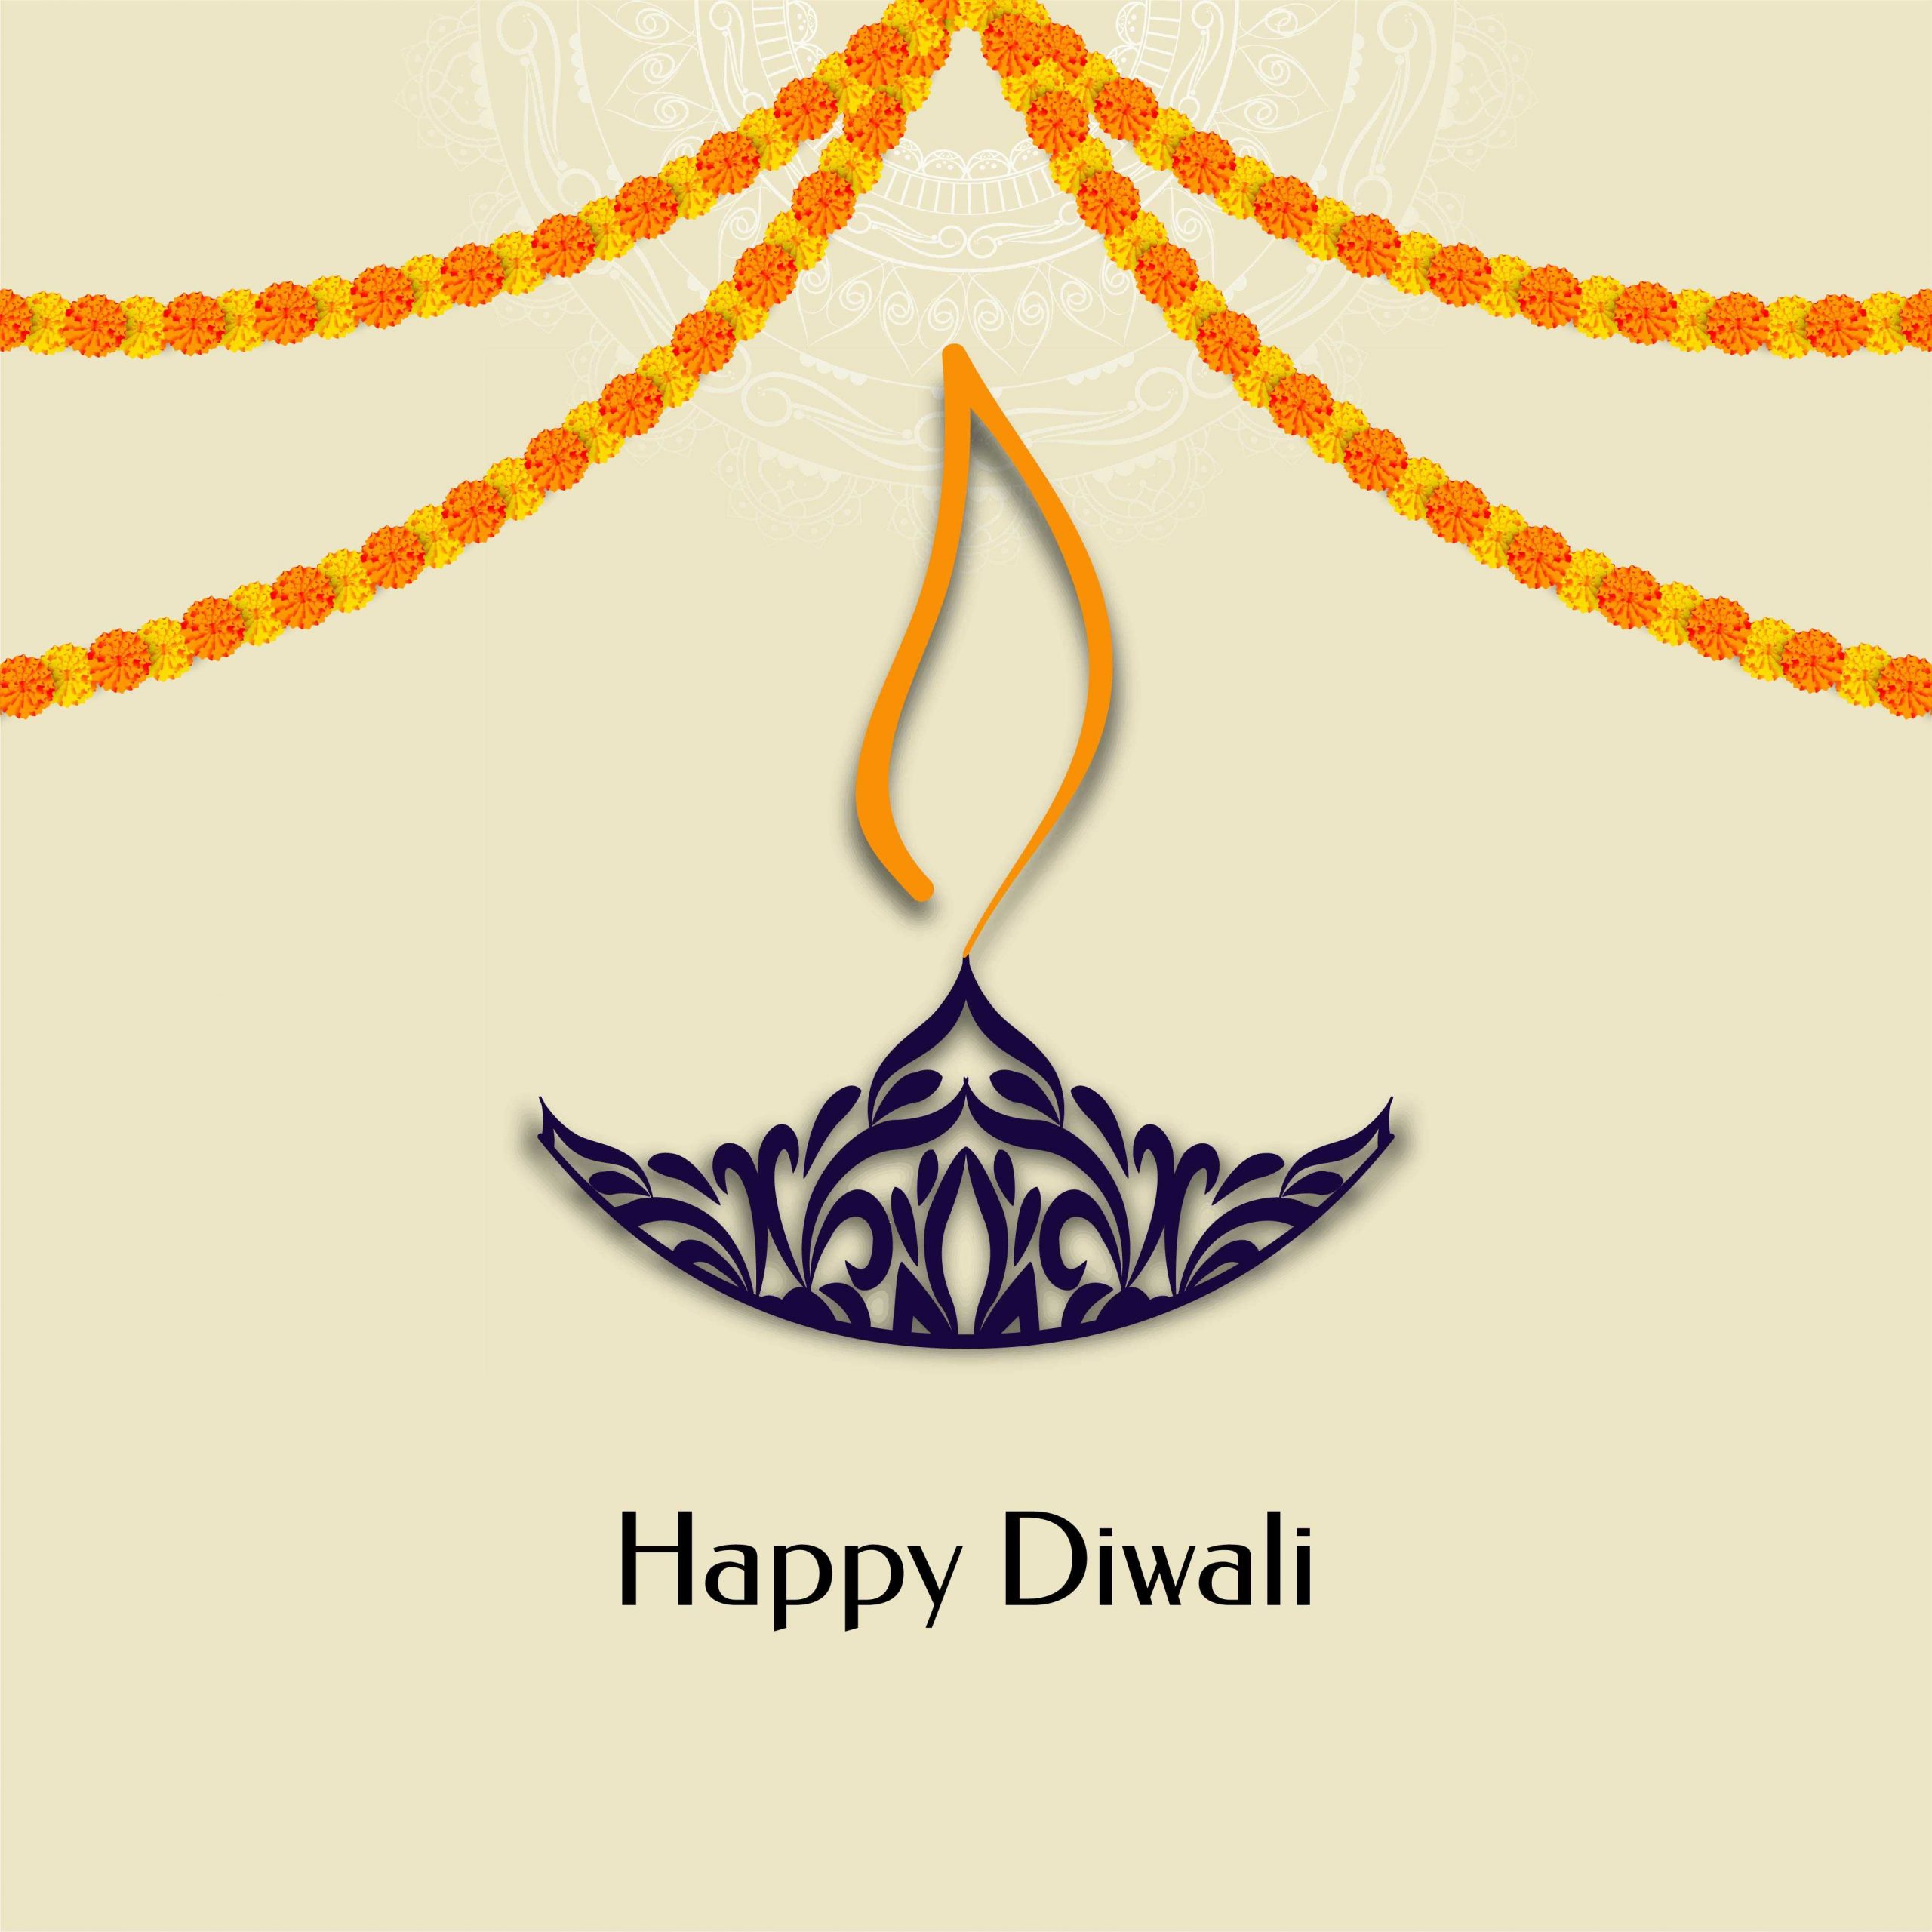 Happy Diwali pictures